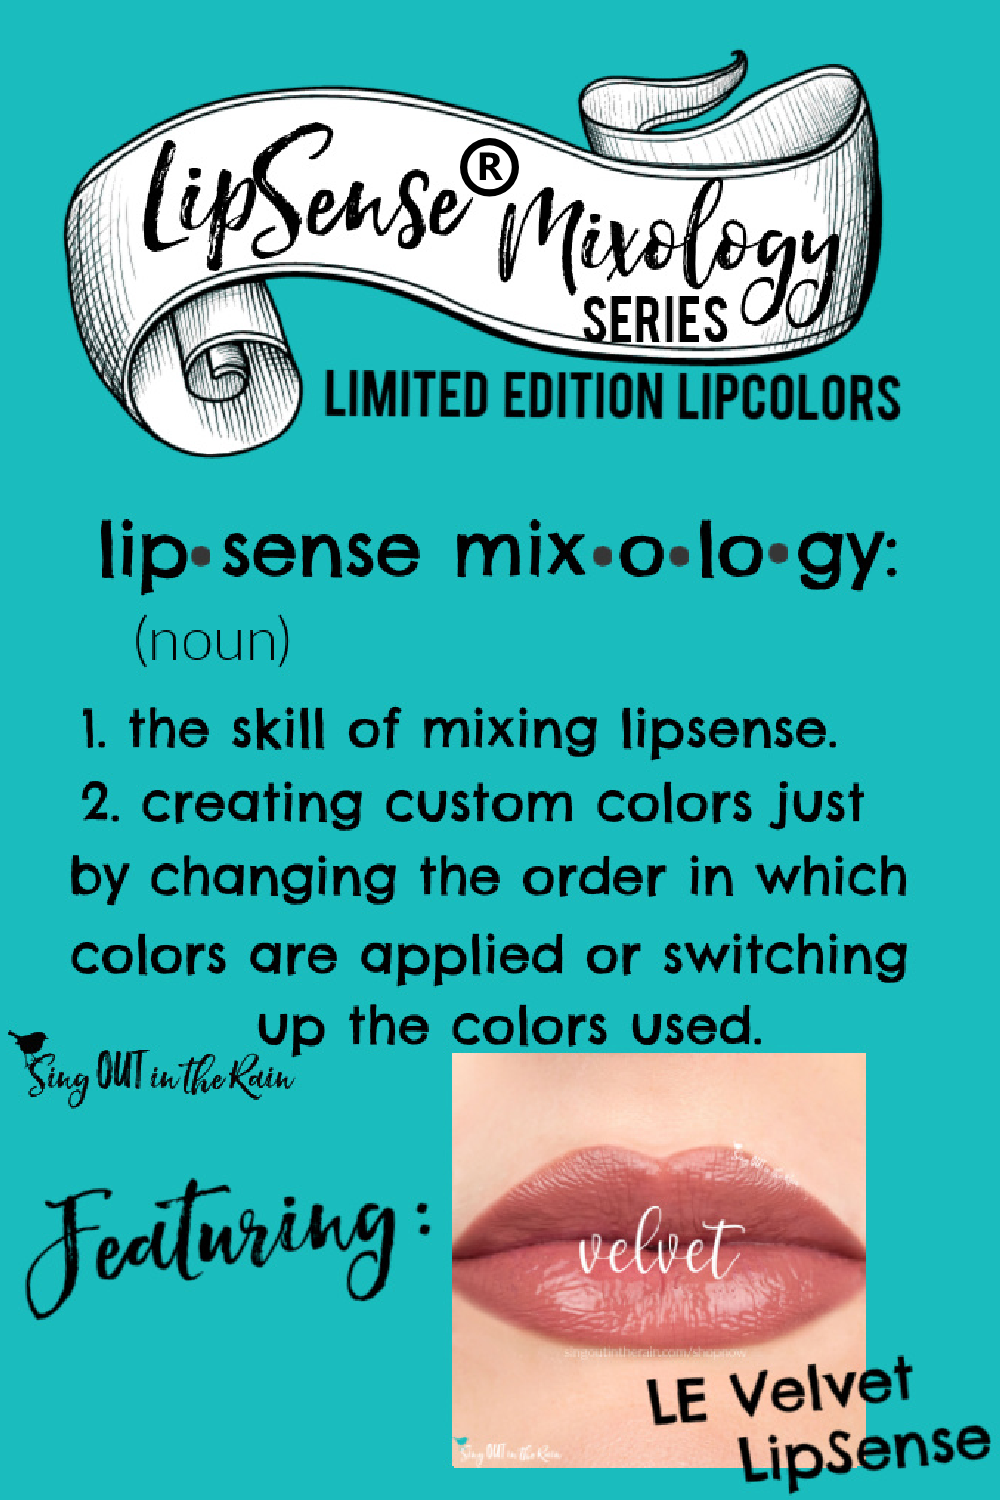 The Ultimate Guide to Velvet LipSense Mixology